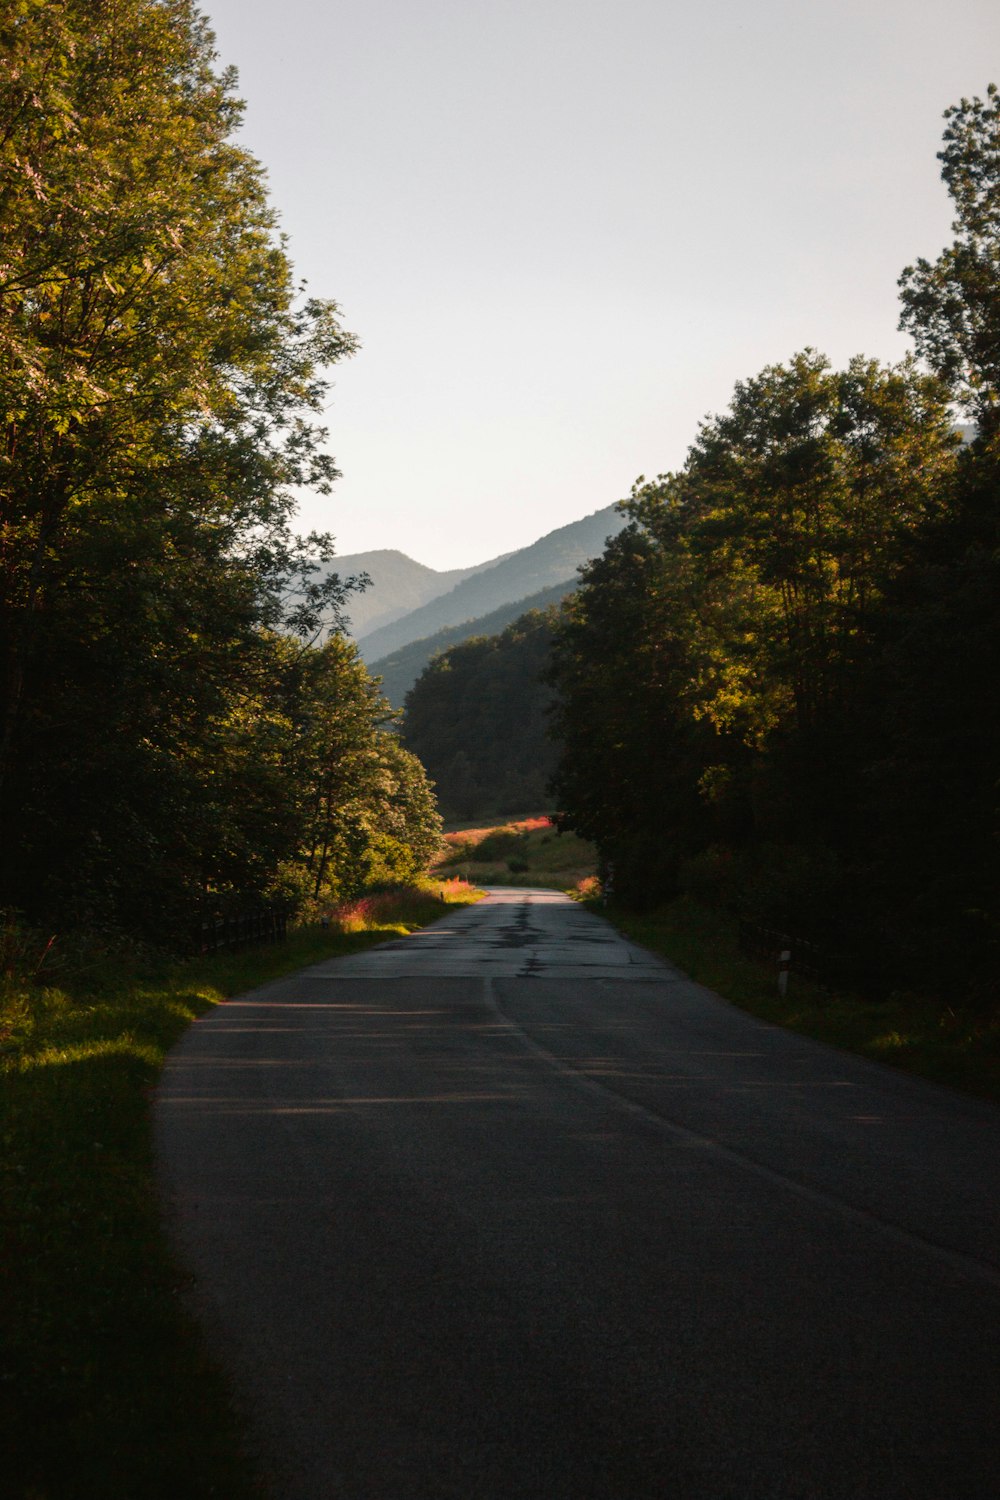 empty road through rural area